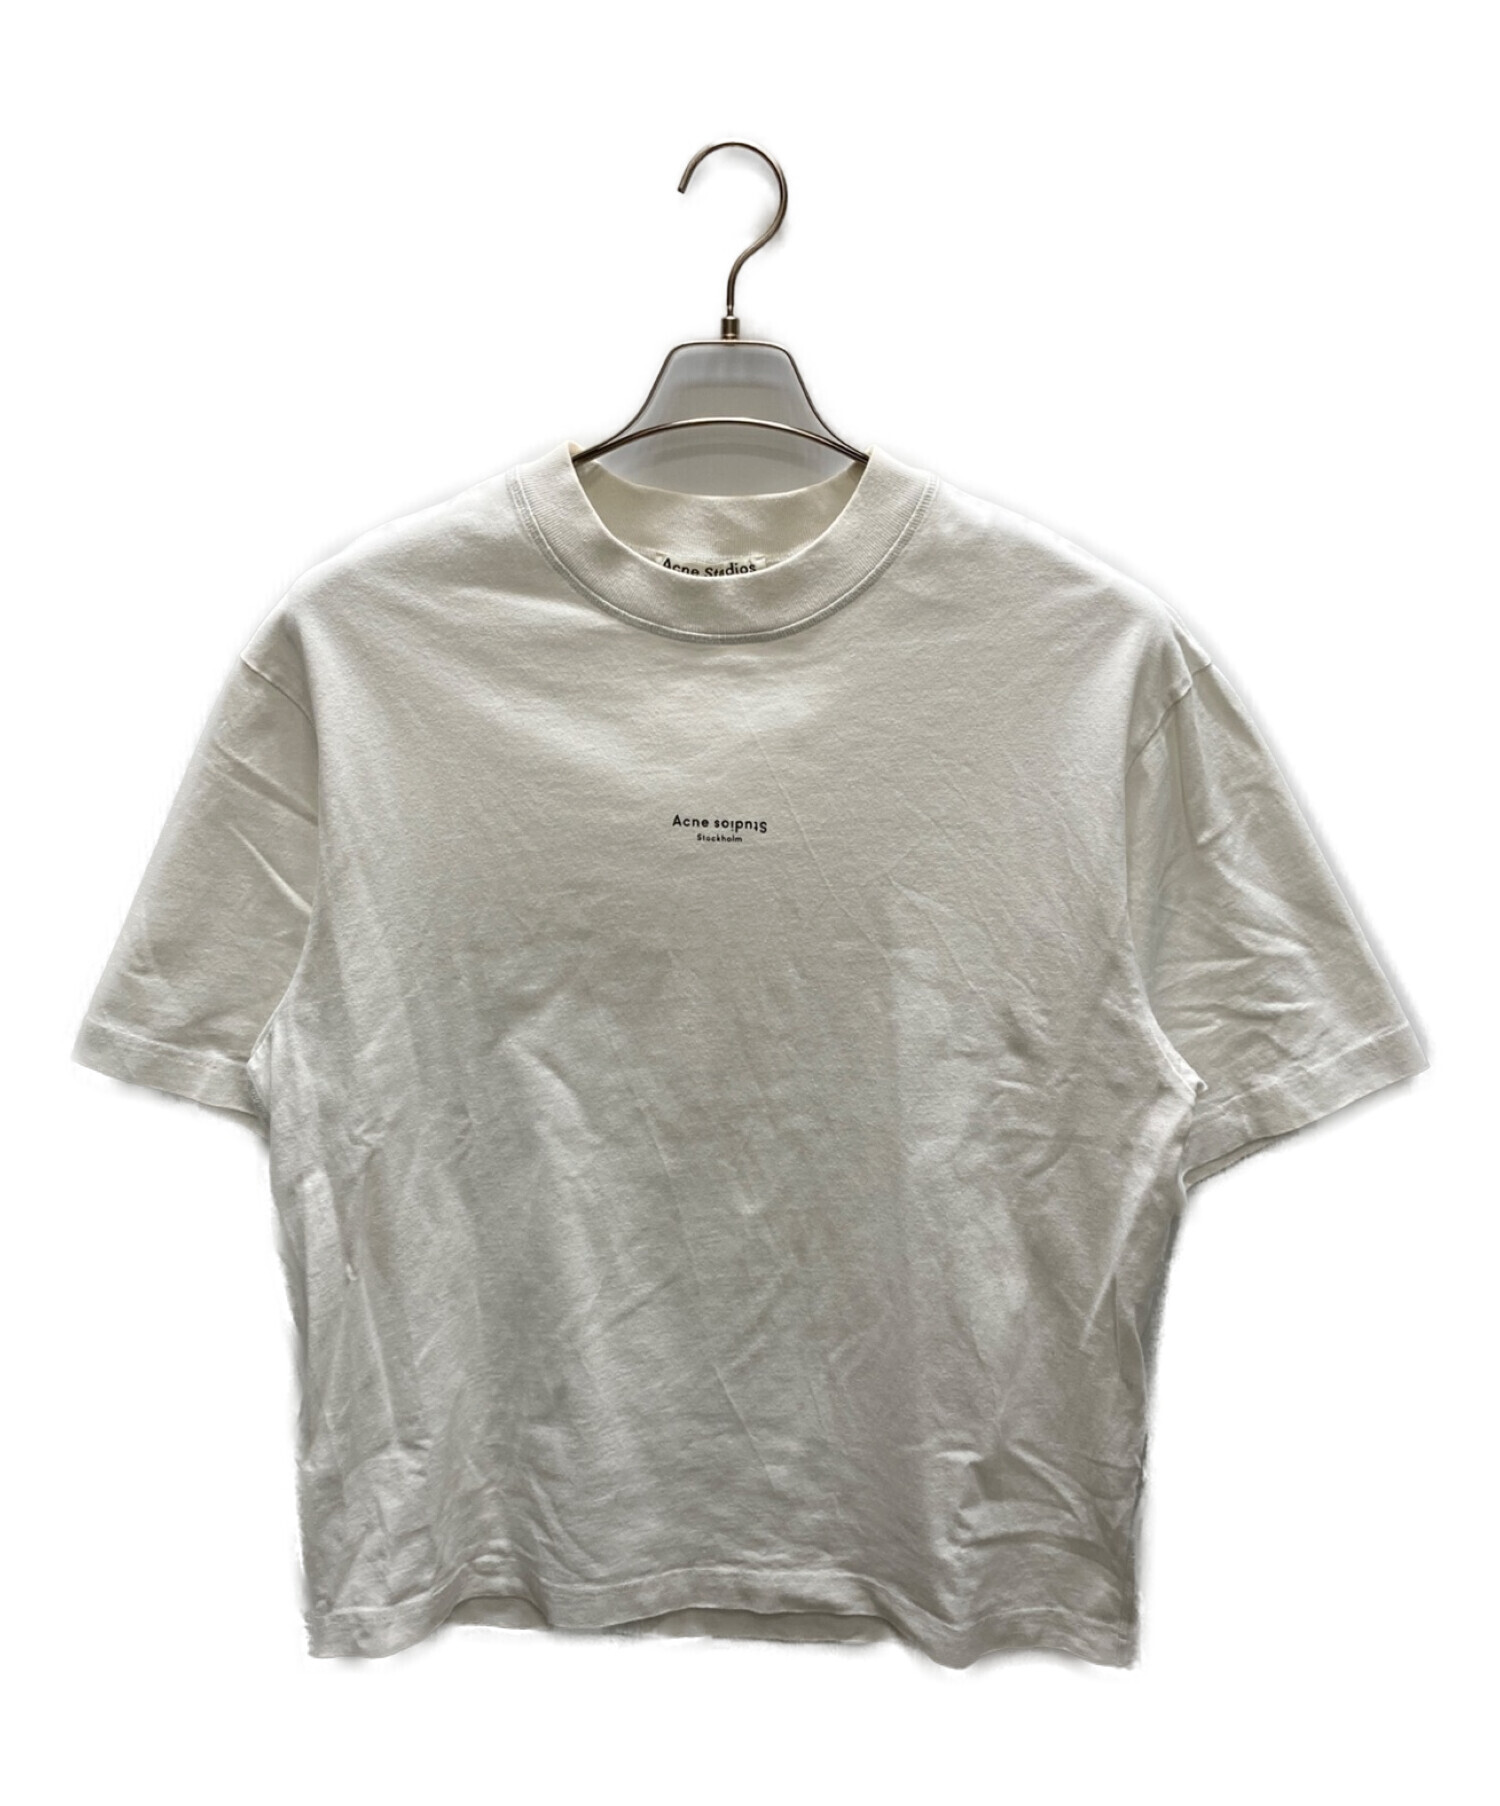 Acne Studios アクネストゥディオス 襟ロゴ Tシャツ S ホワイト-